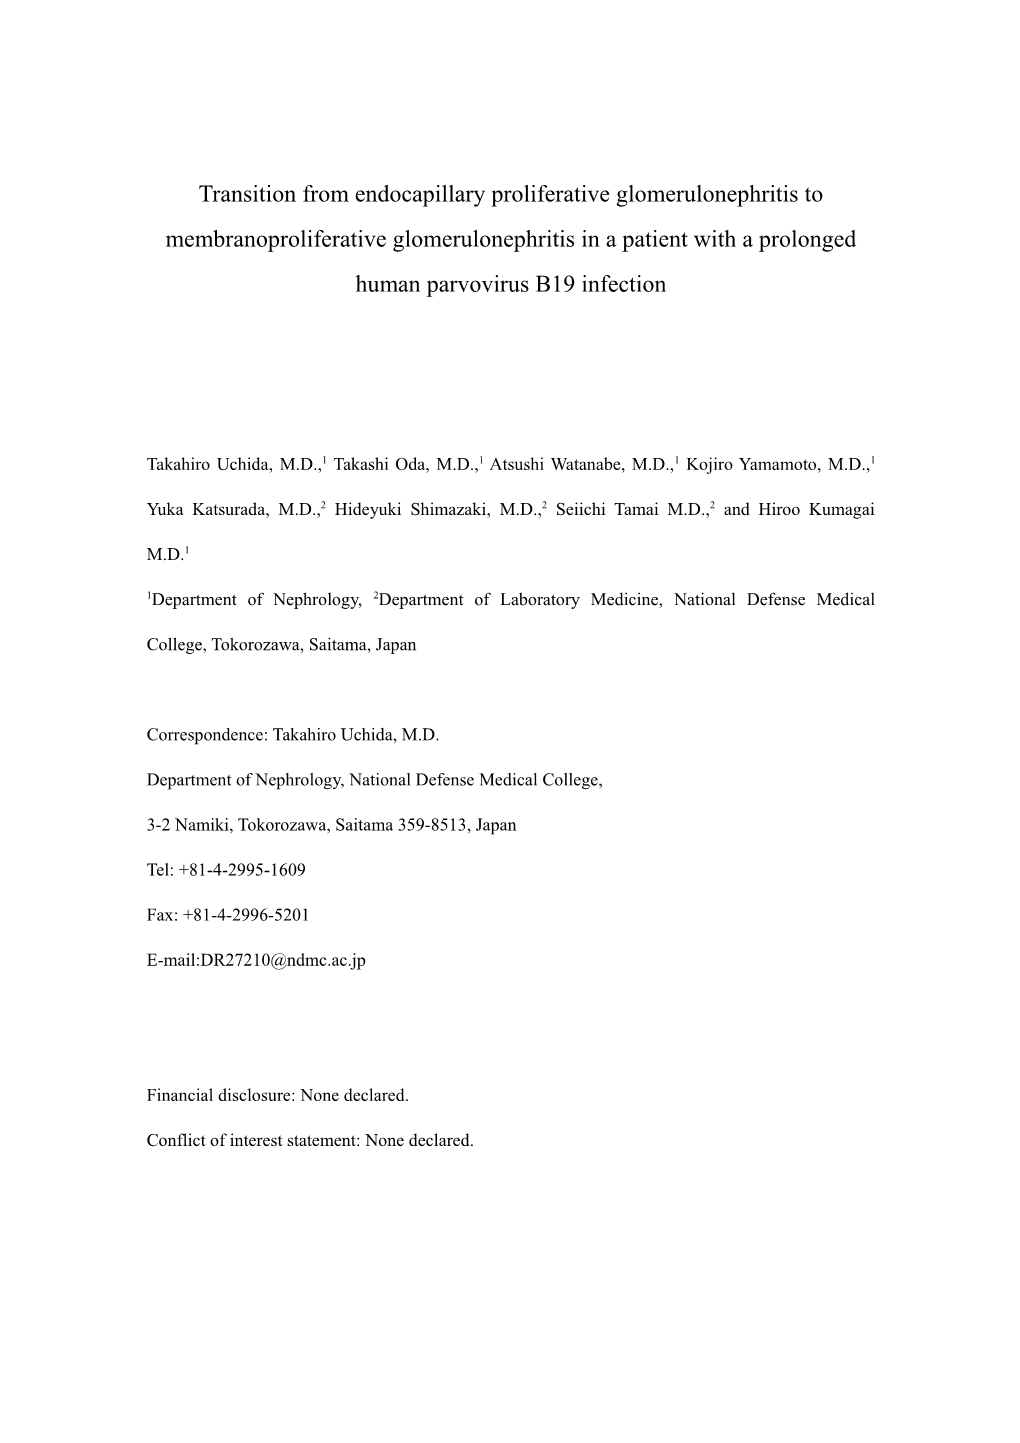 Transition from Endocapillary Proliferative Glomerulonephritis to Membranoproliferative